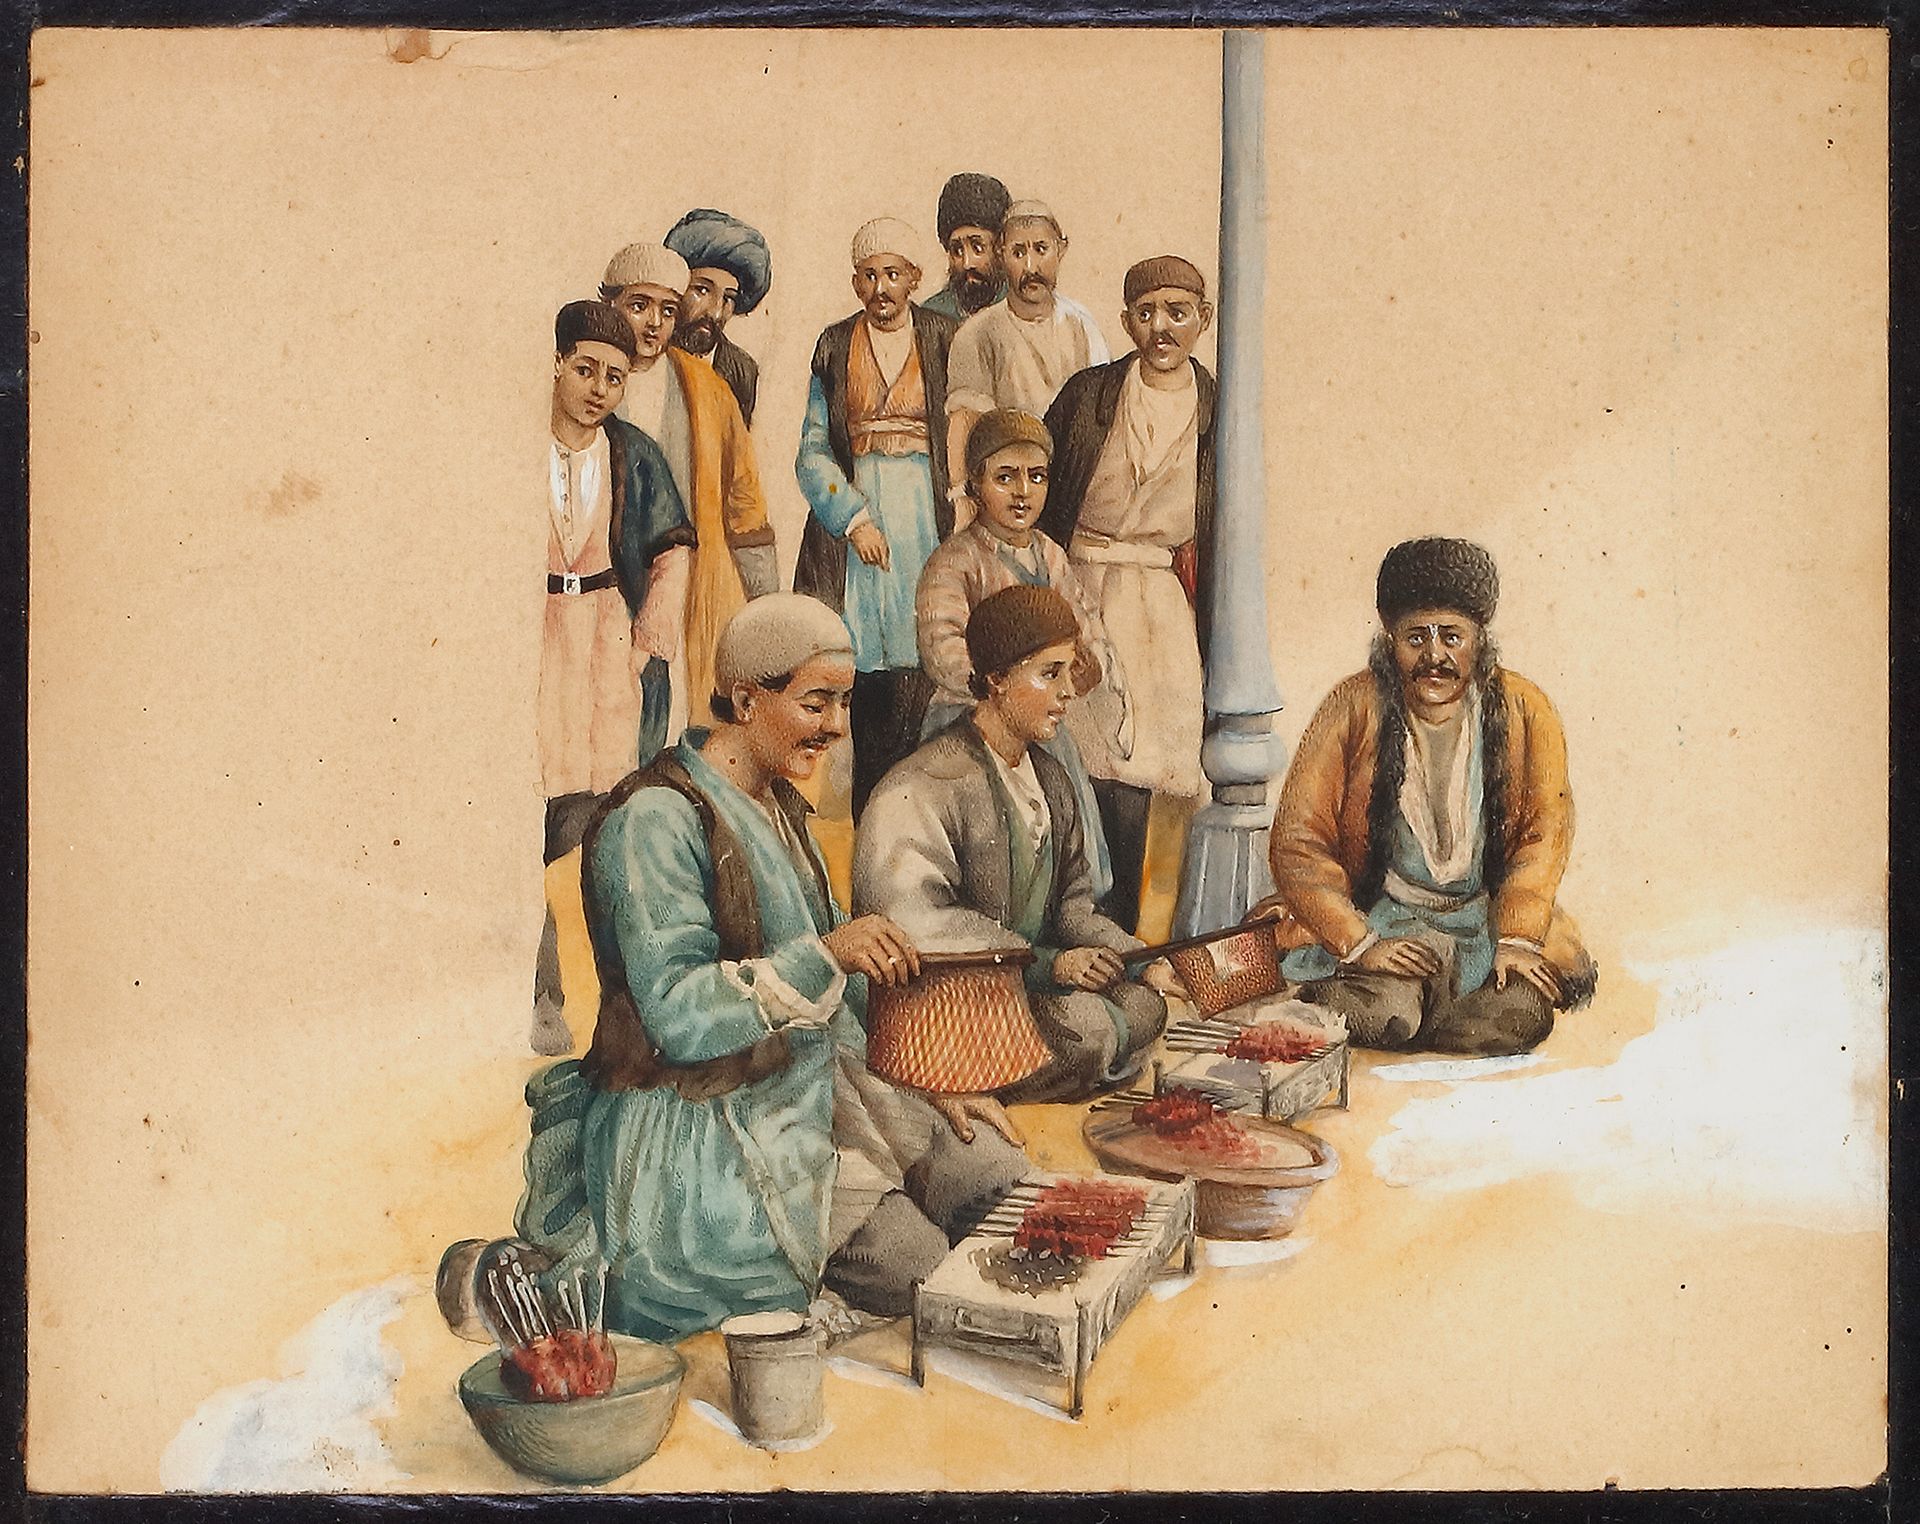 ROASTING ON THE MARKET, QAJAR, IRAN, 19TH CENTURY Painting

16.5 cm. By 20.5 cm.